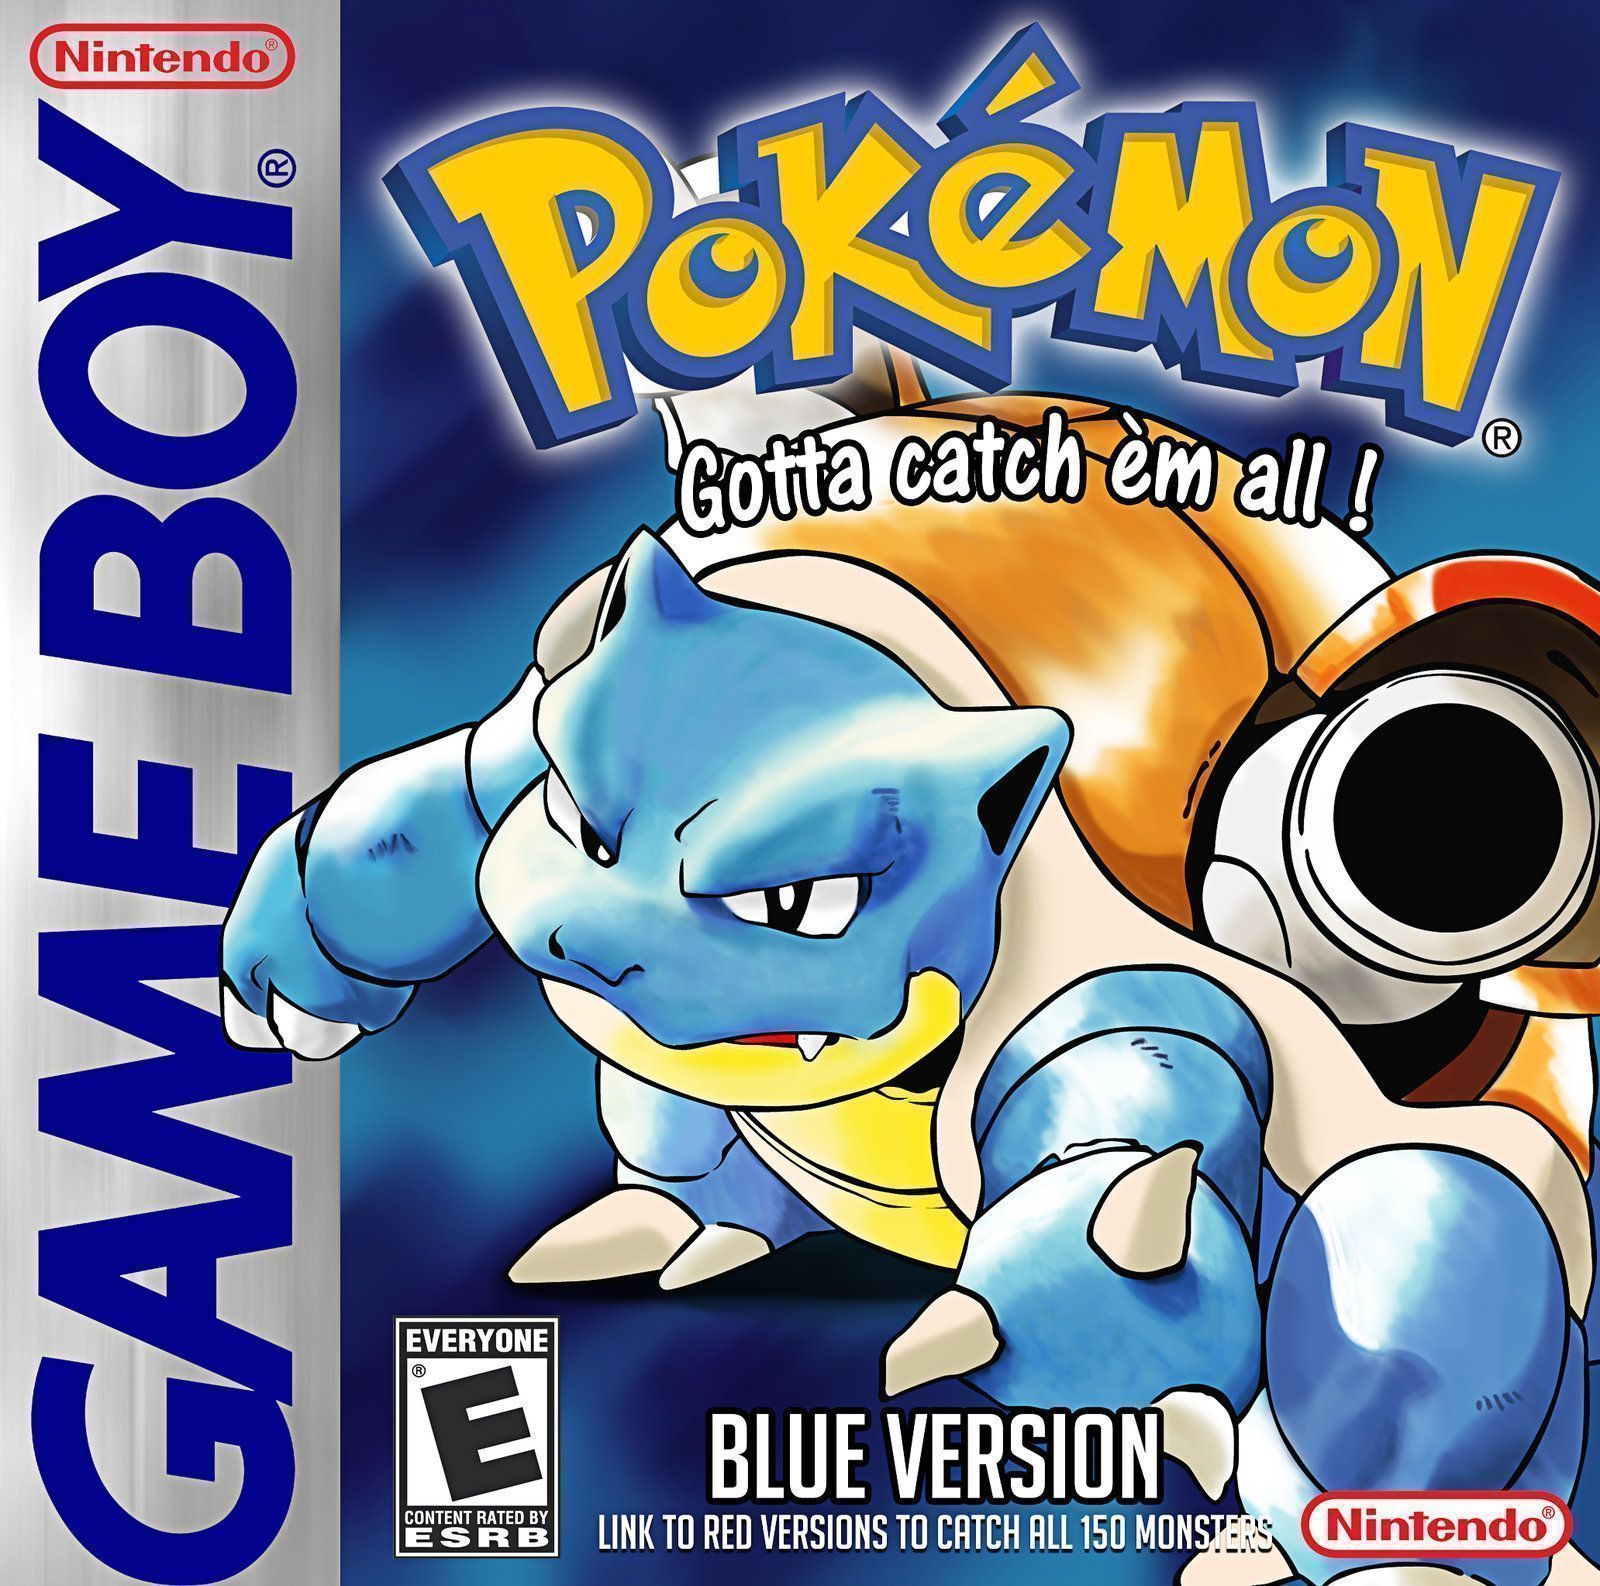 Pokemon – Blue Version (USA Europe) Gameboy – Download ROM